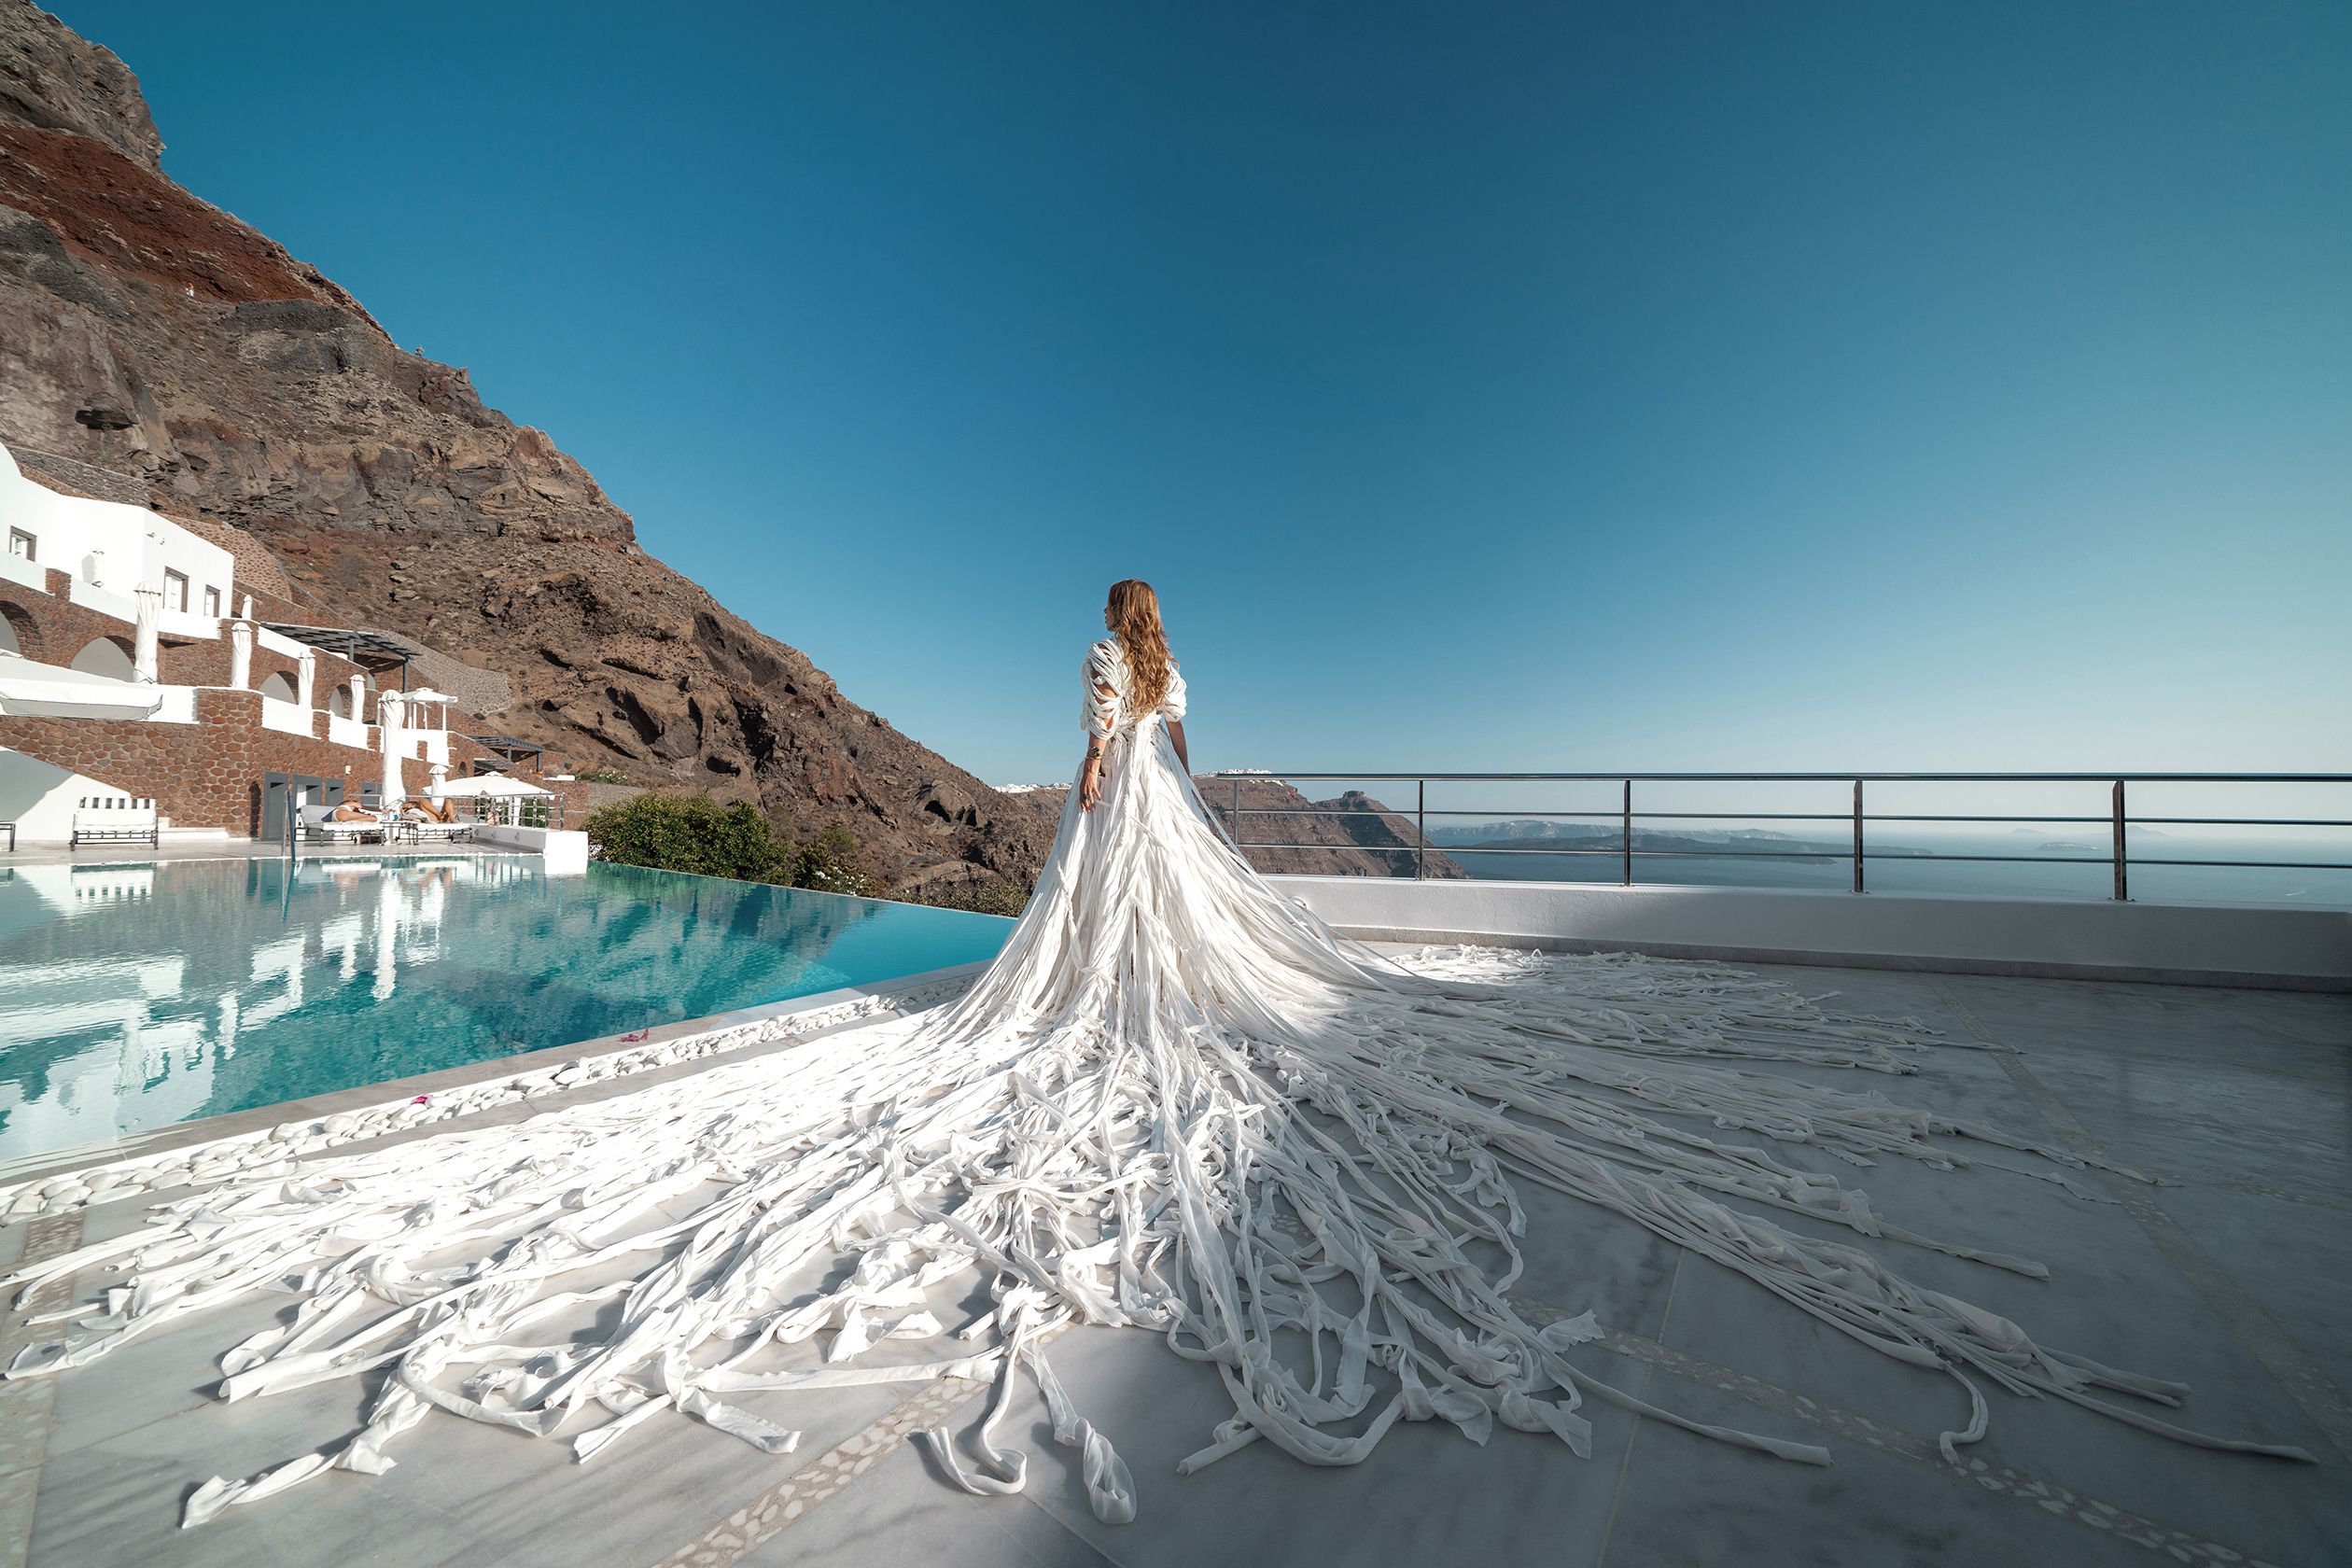 Photoshoot at the San Antonio hotel in Santorini with an amazing designer's dress